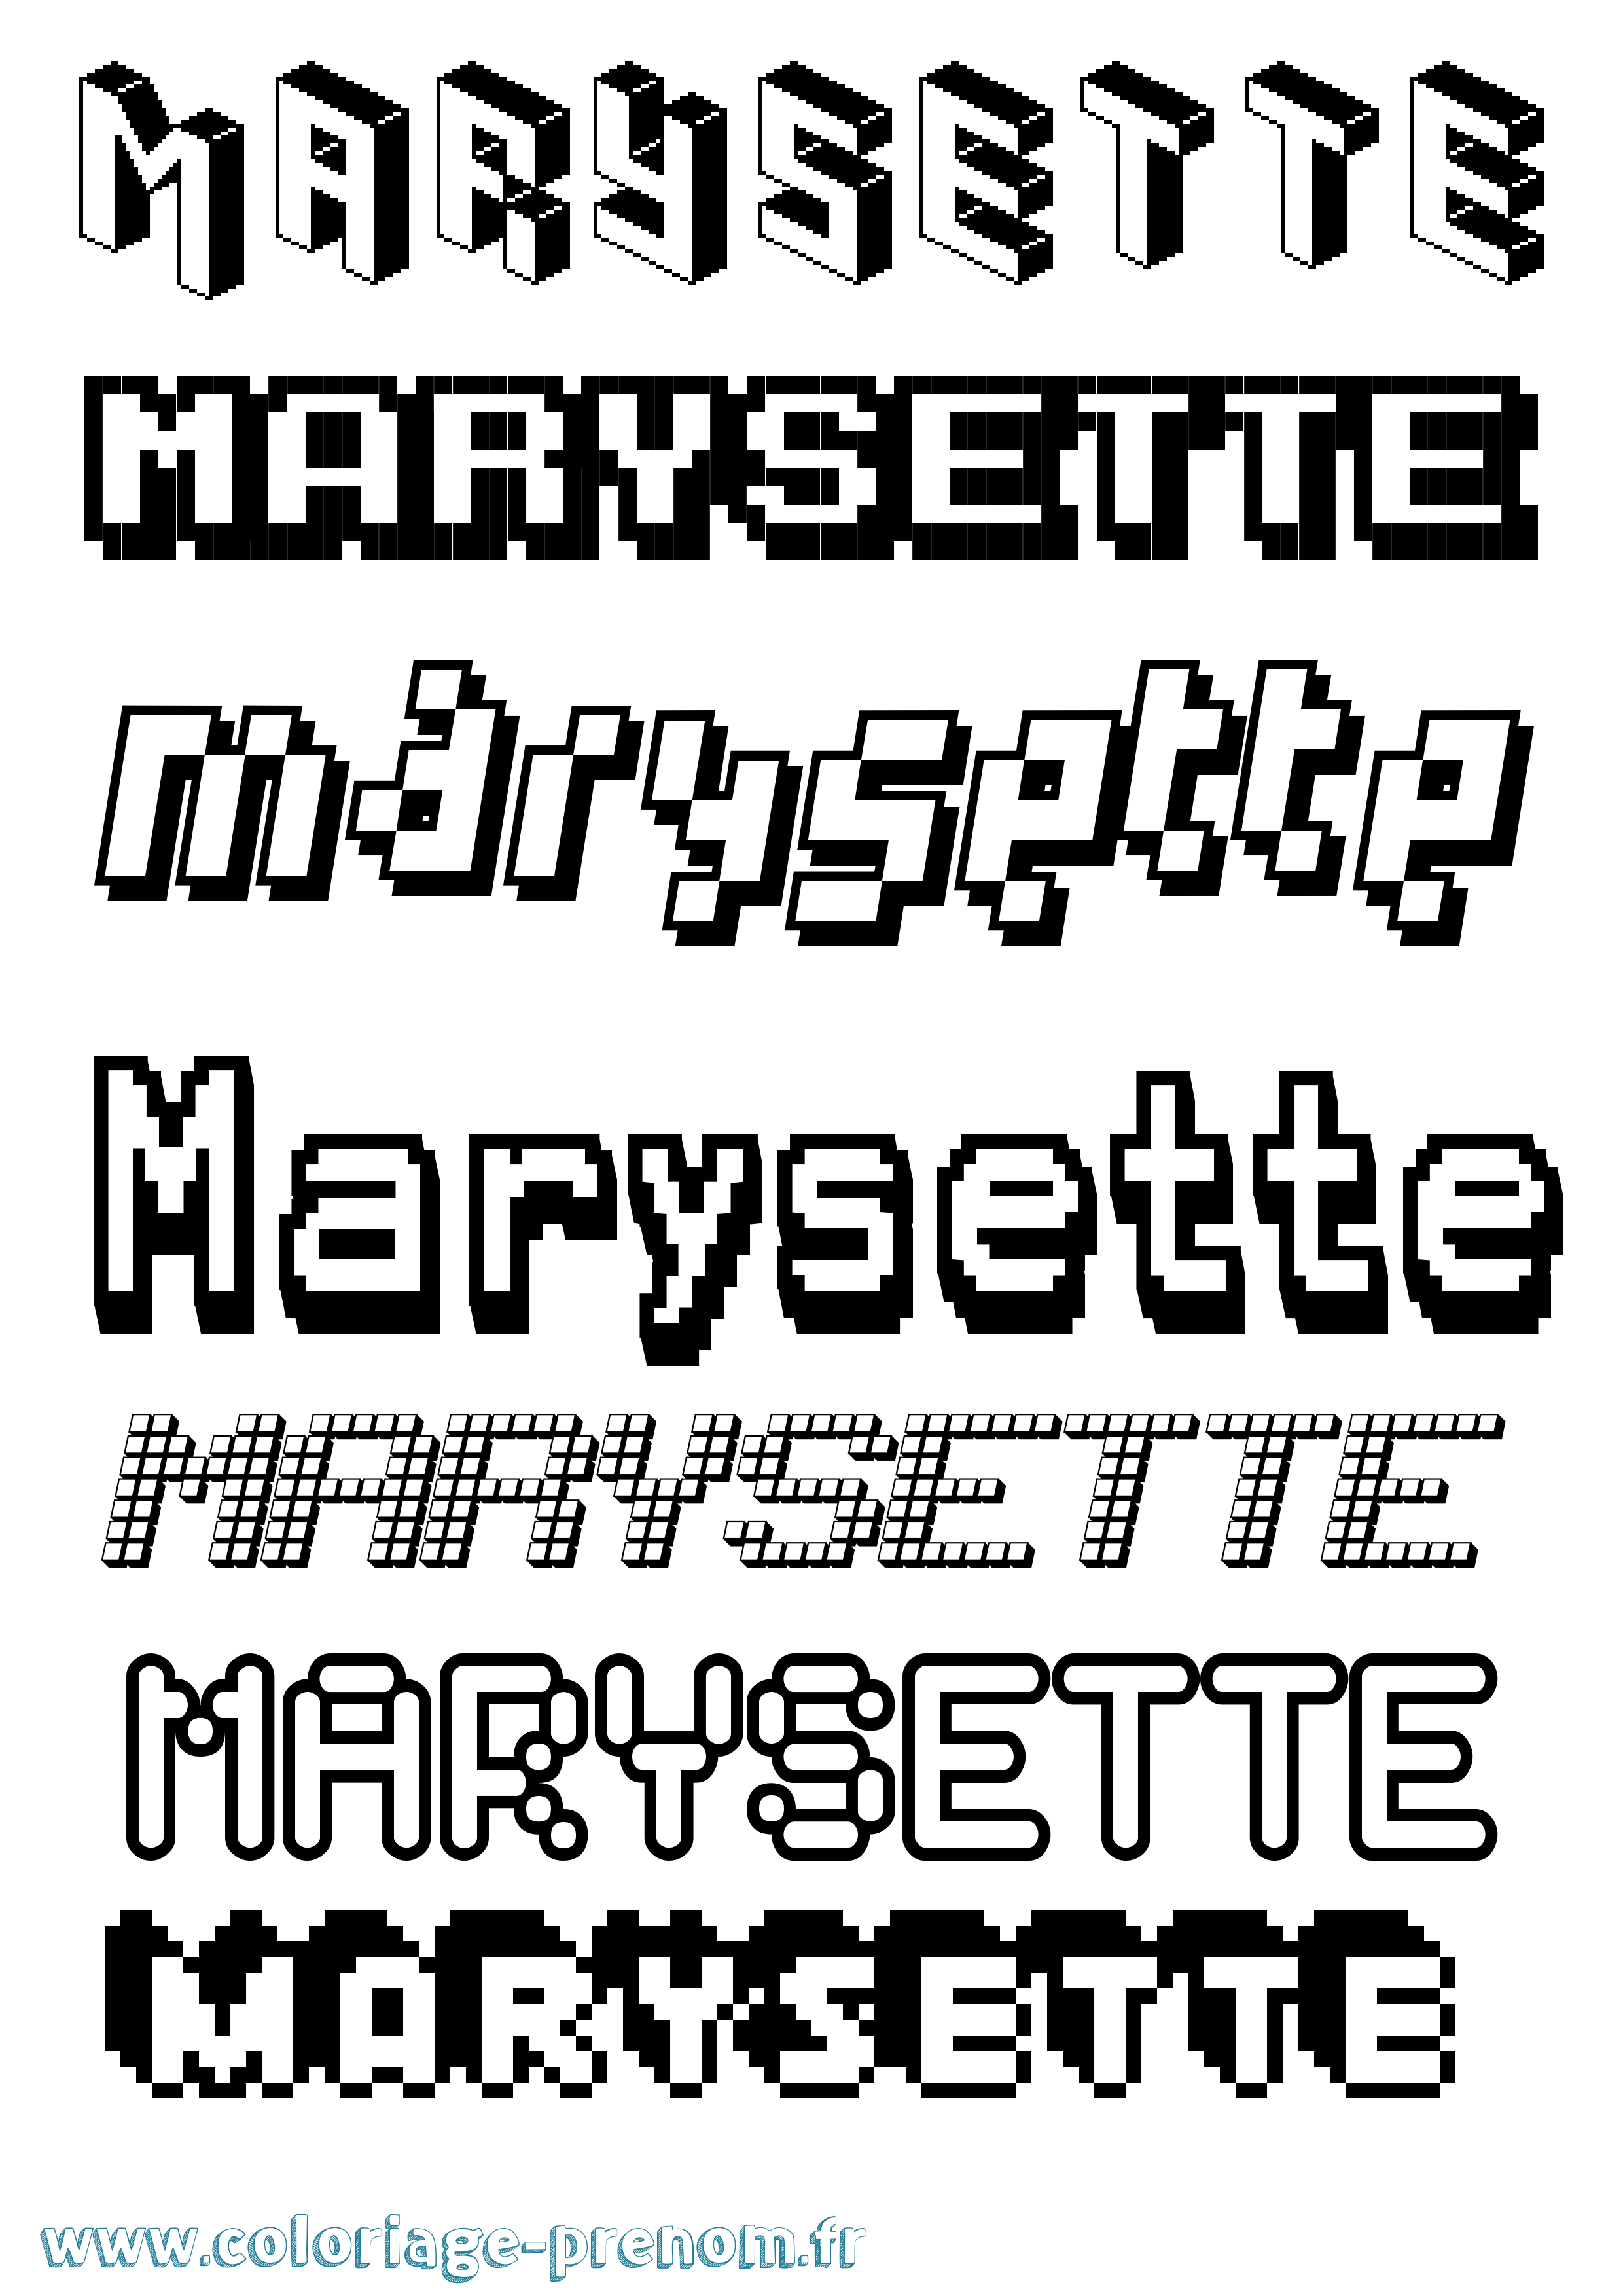 Coloriage prénom Marysette Pixel